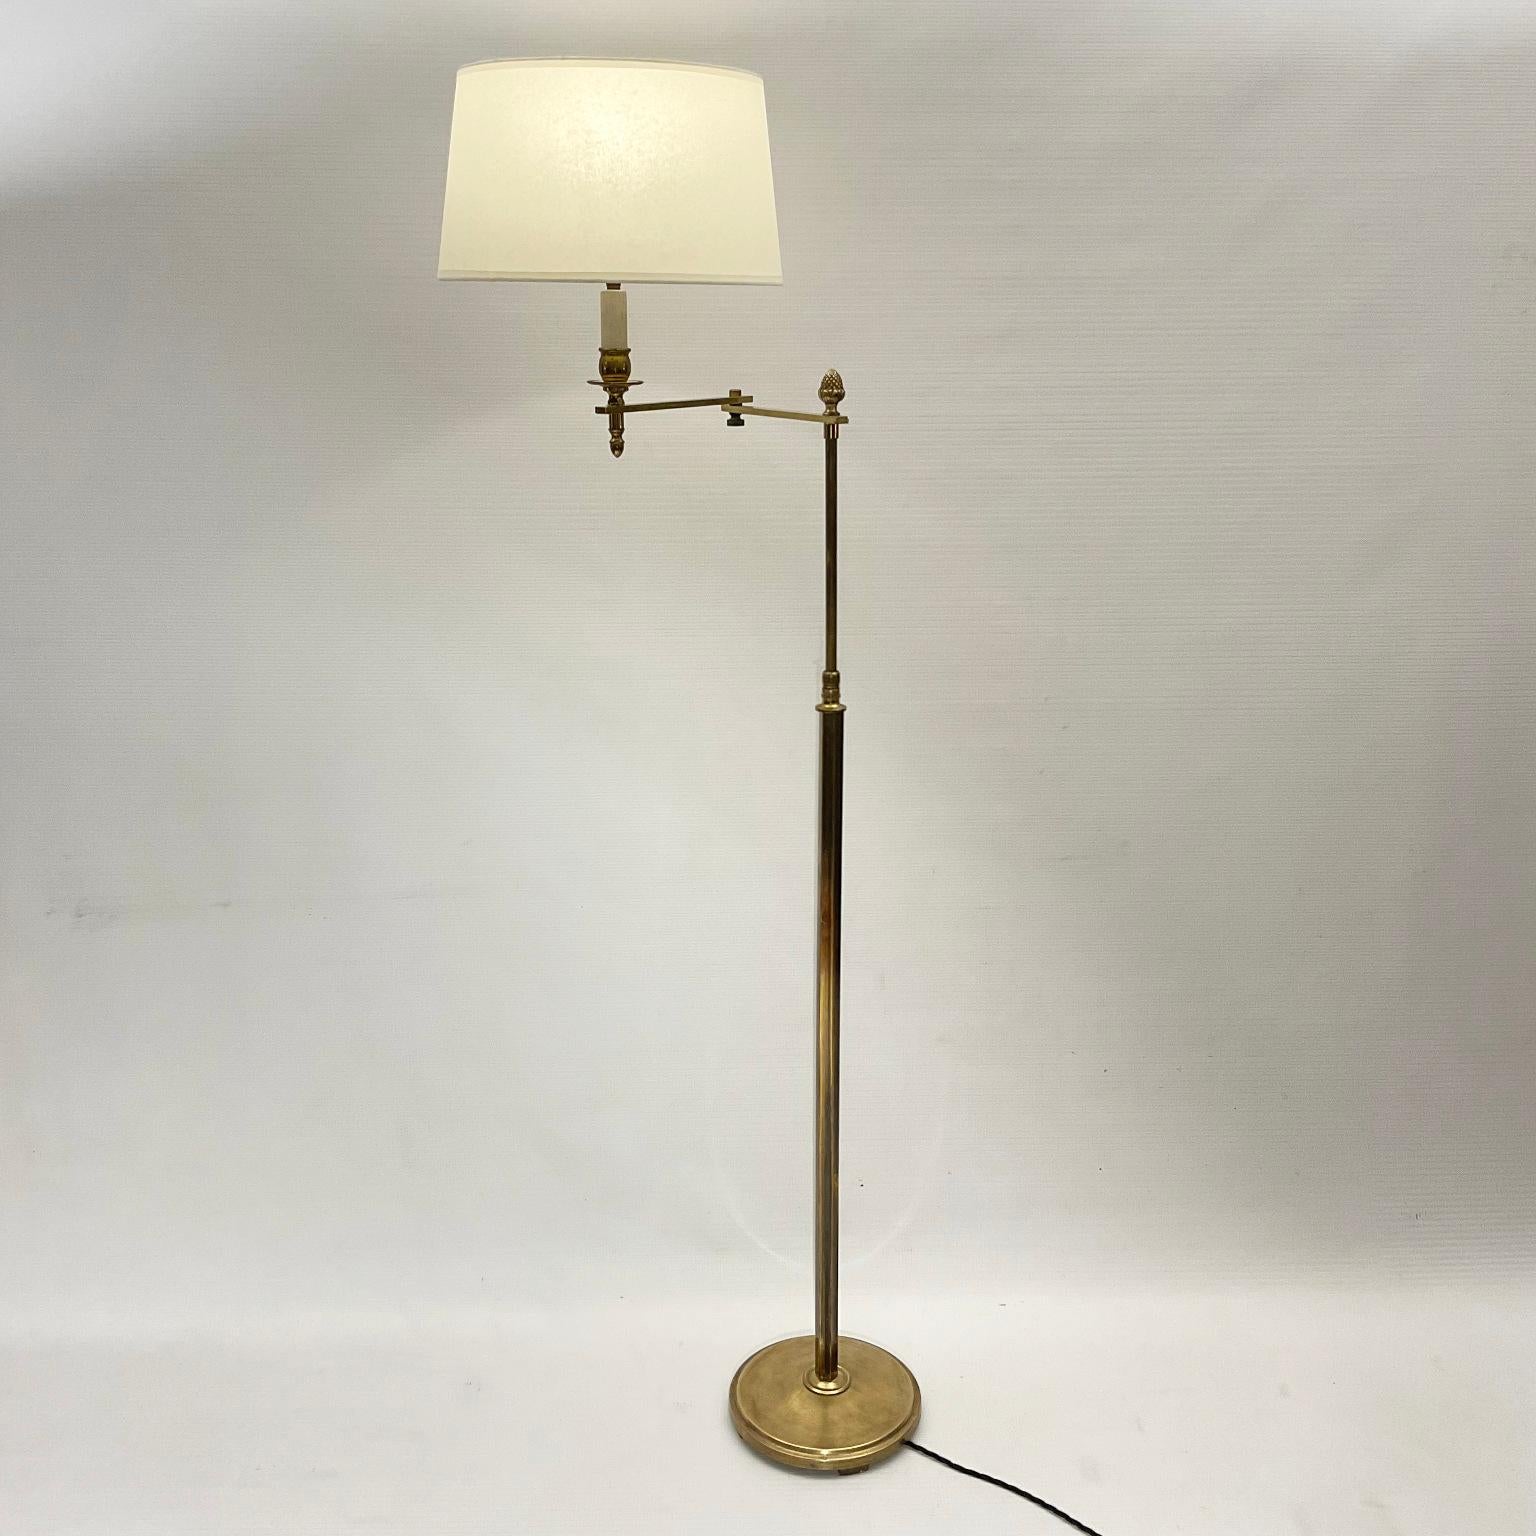 1960s brass reading floor lamp called 